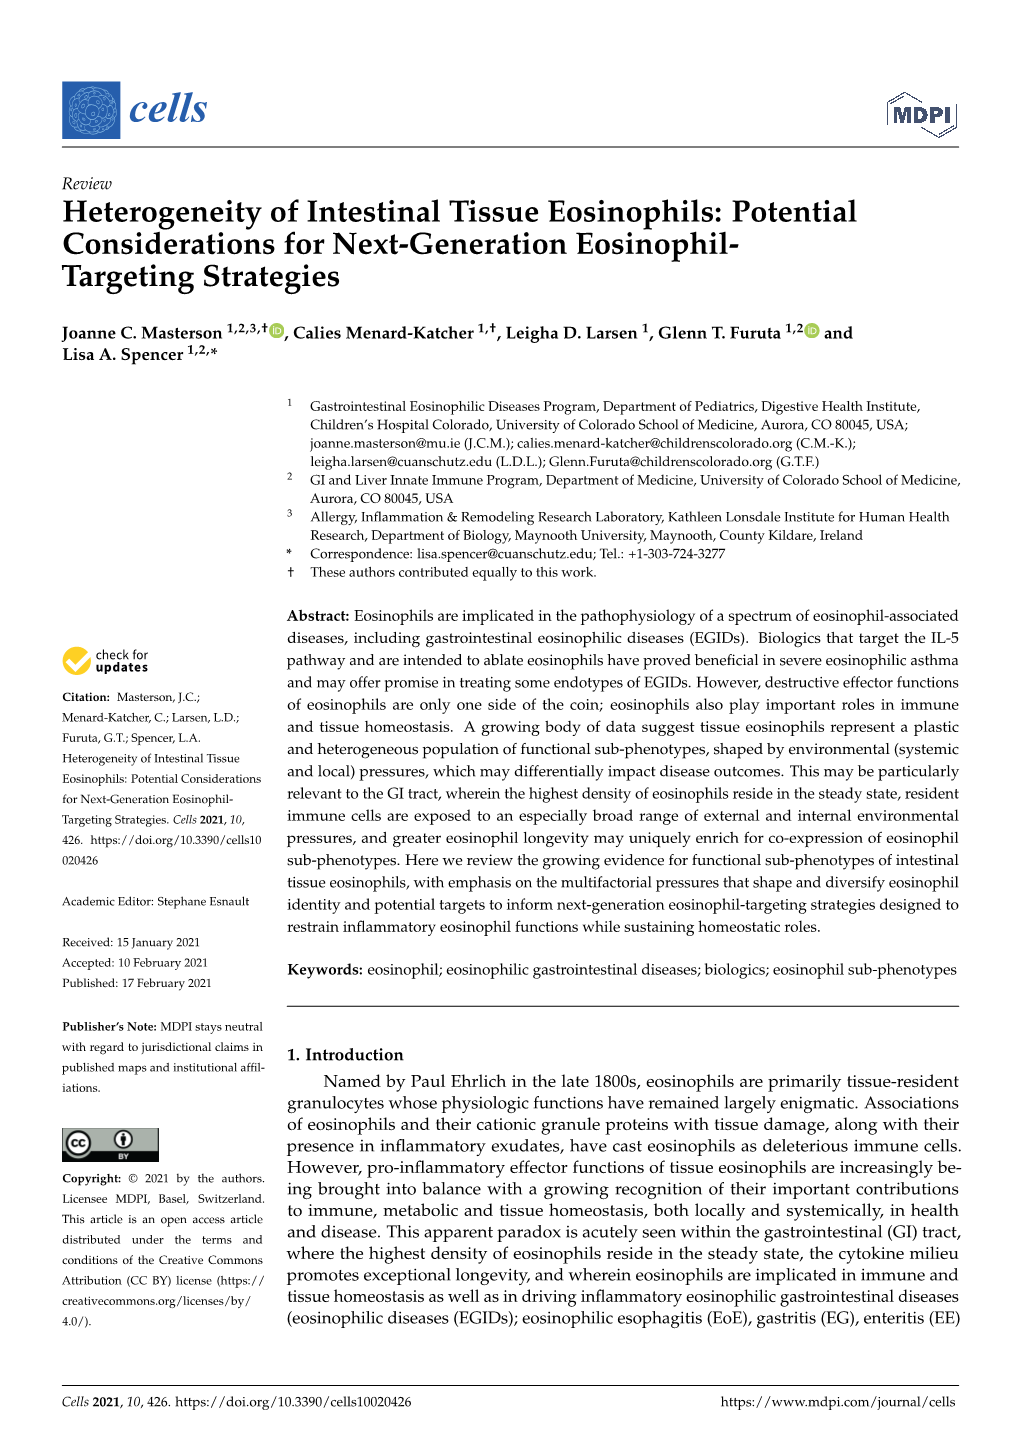 Heterogeneity of Intestinal Tissue Eosinophils: Potential Considerations for Next-Generation Eosinophil- Targeting Strategies